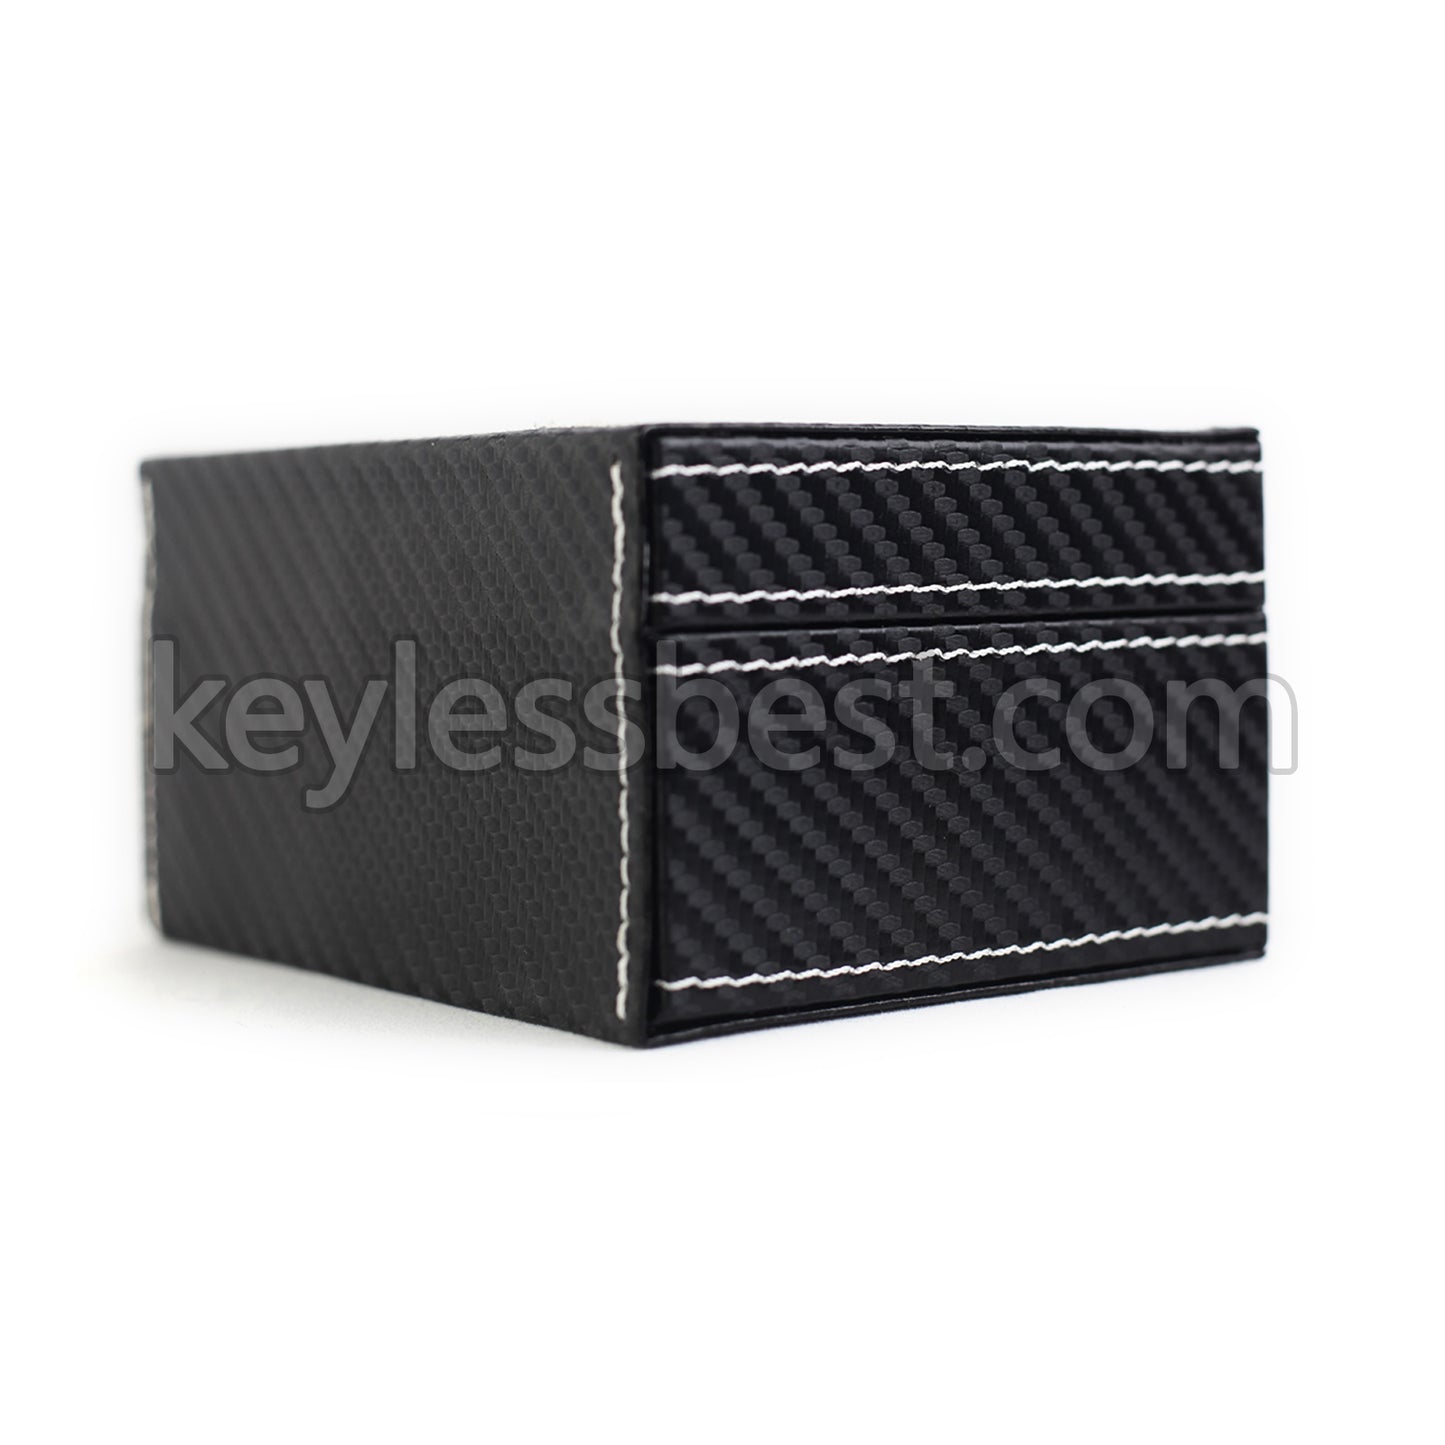 Faraday Box smart phone signal blockers box faraday cage for car keys